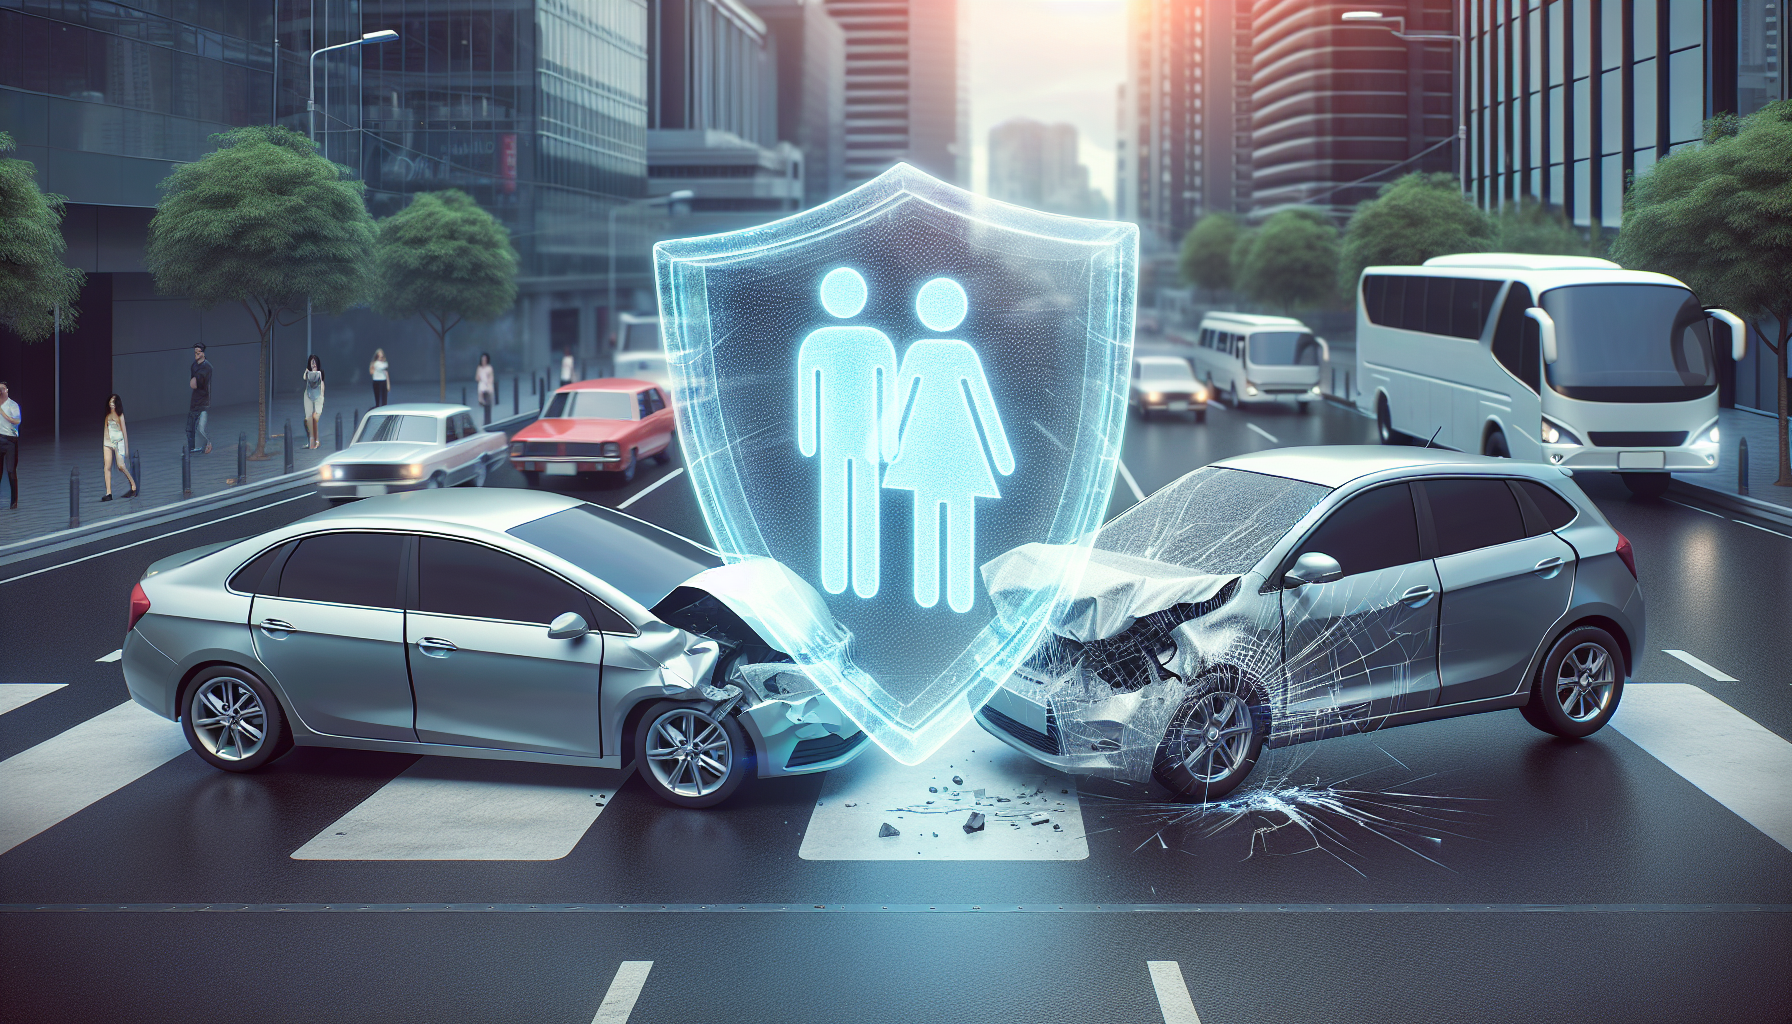 Illustration of liability coverage in auto insurance